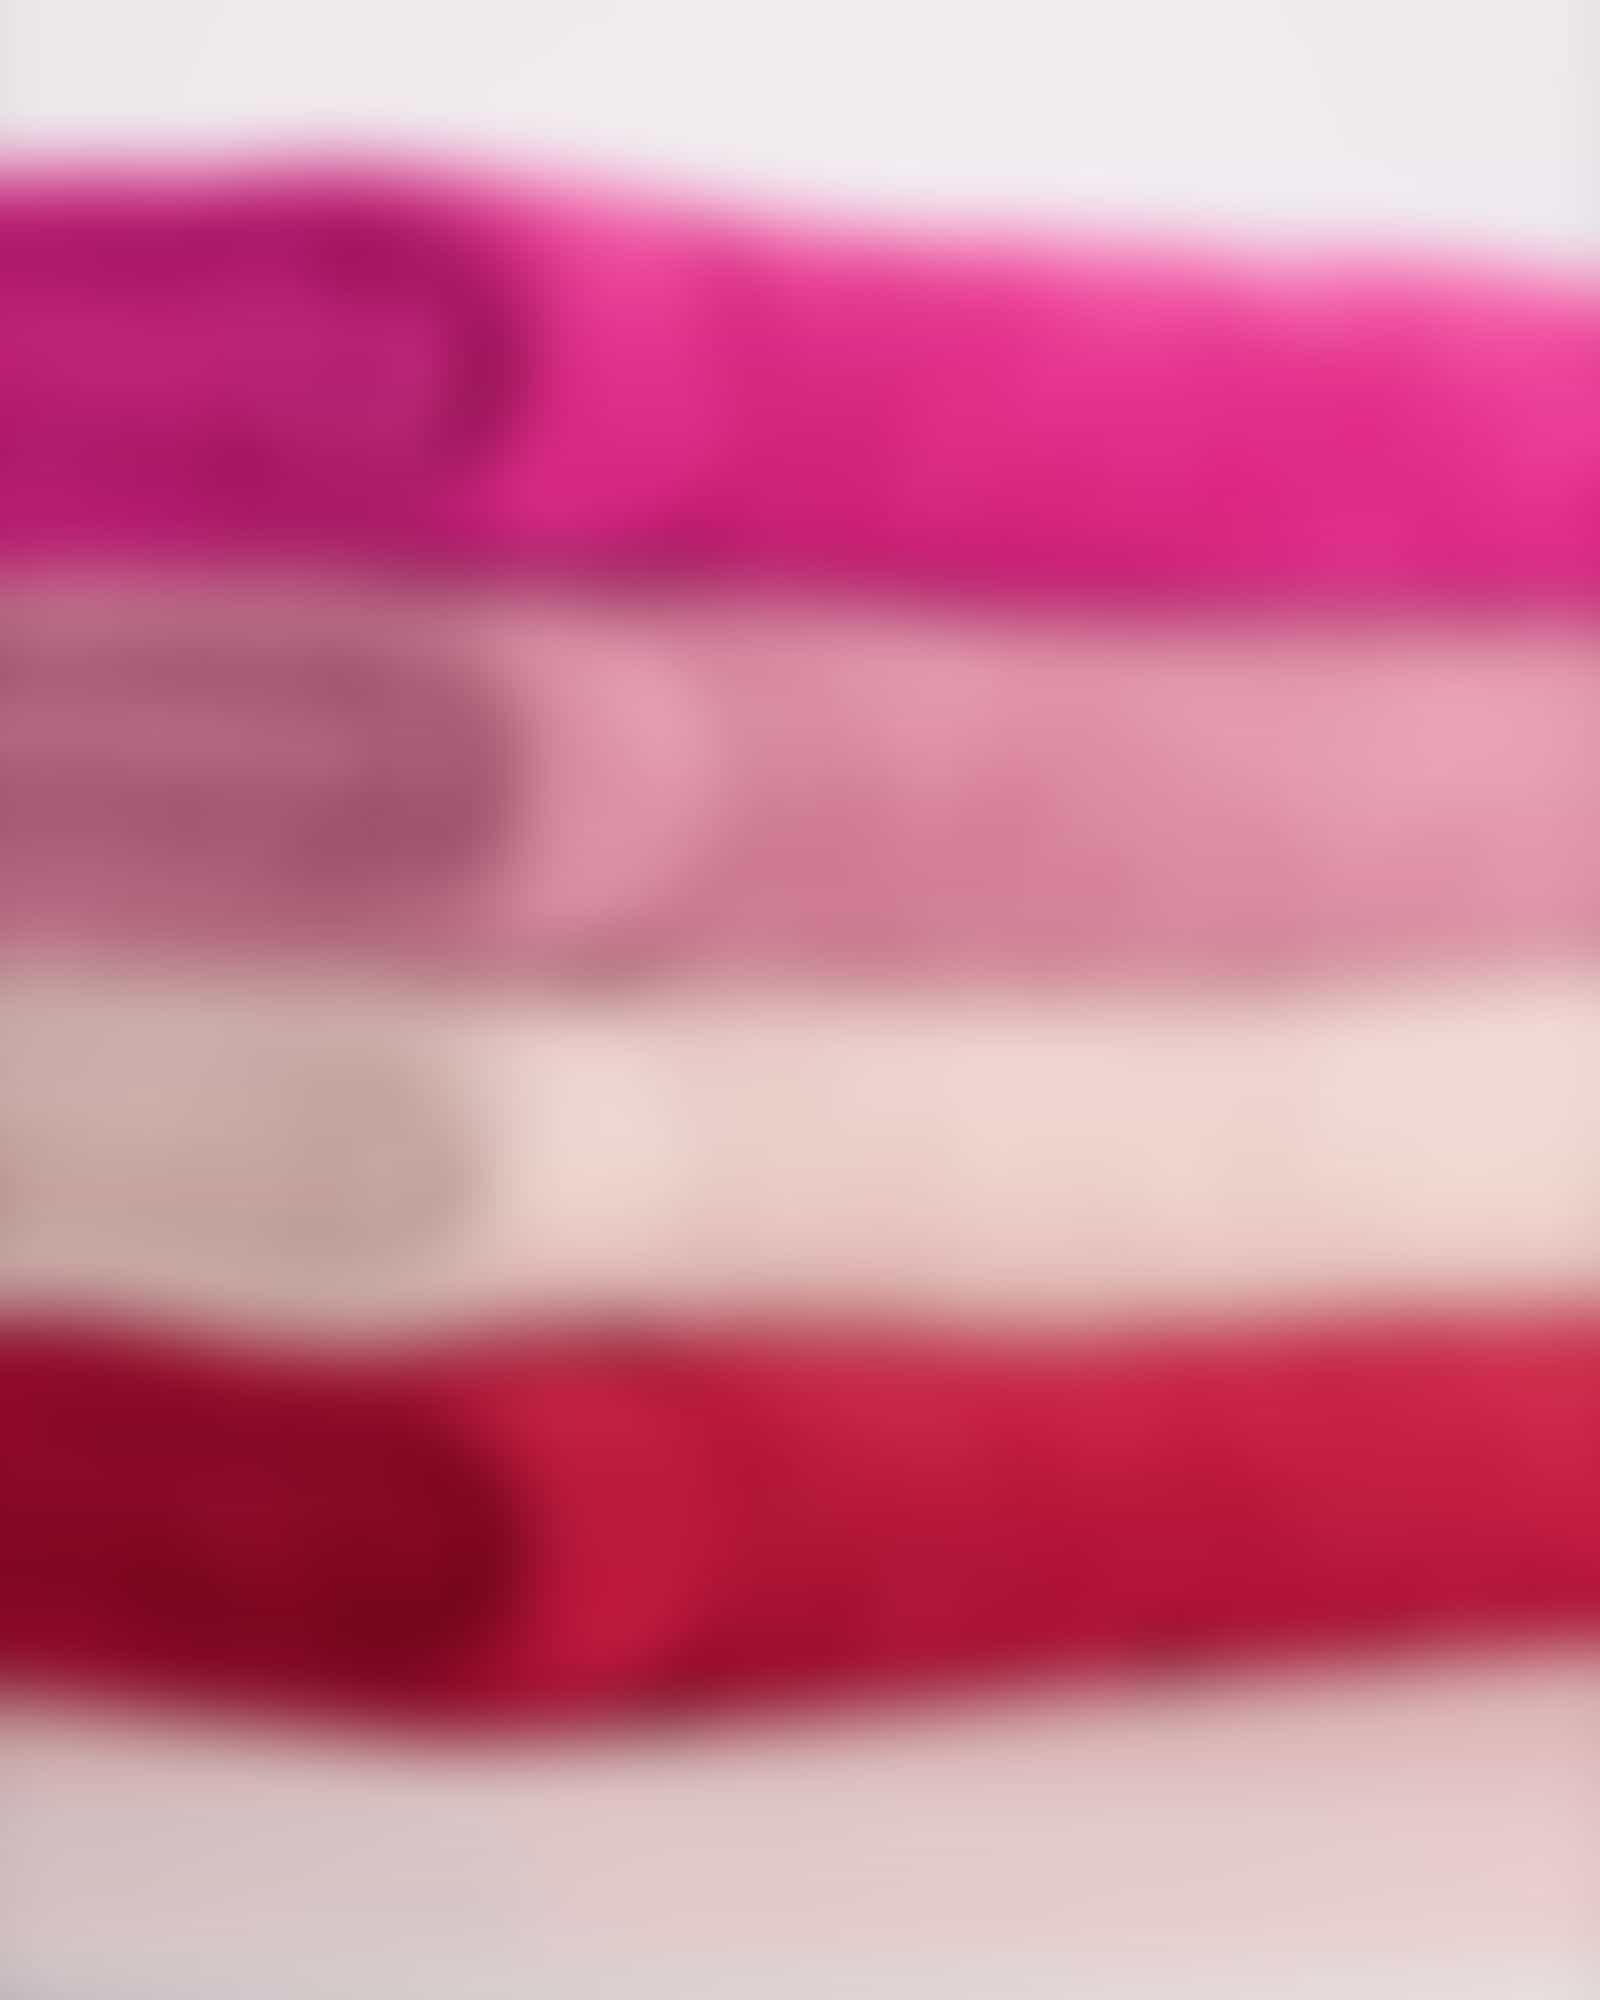 Cawö Handtücher Life Style Uni 7007 - Farbe: blush - 236 - Duschtuch 70x140 cm